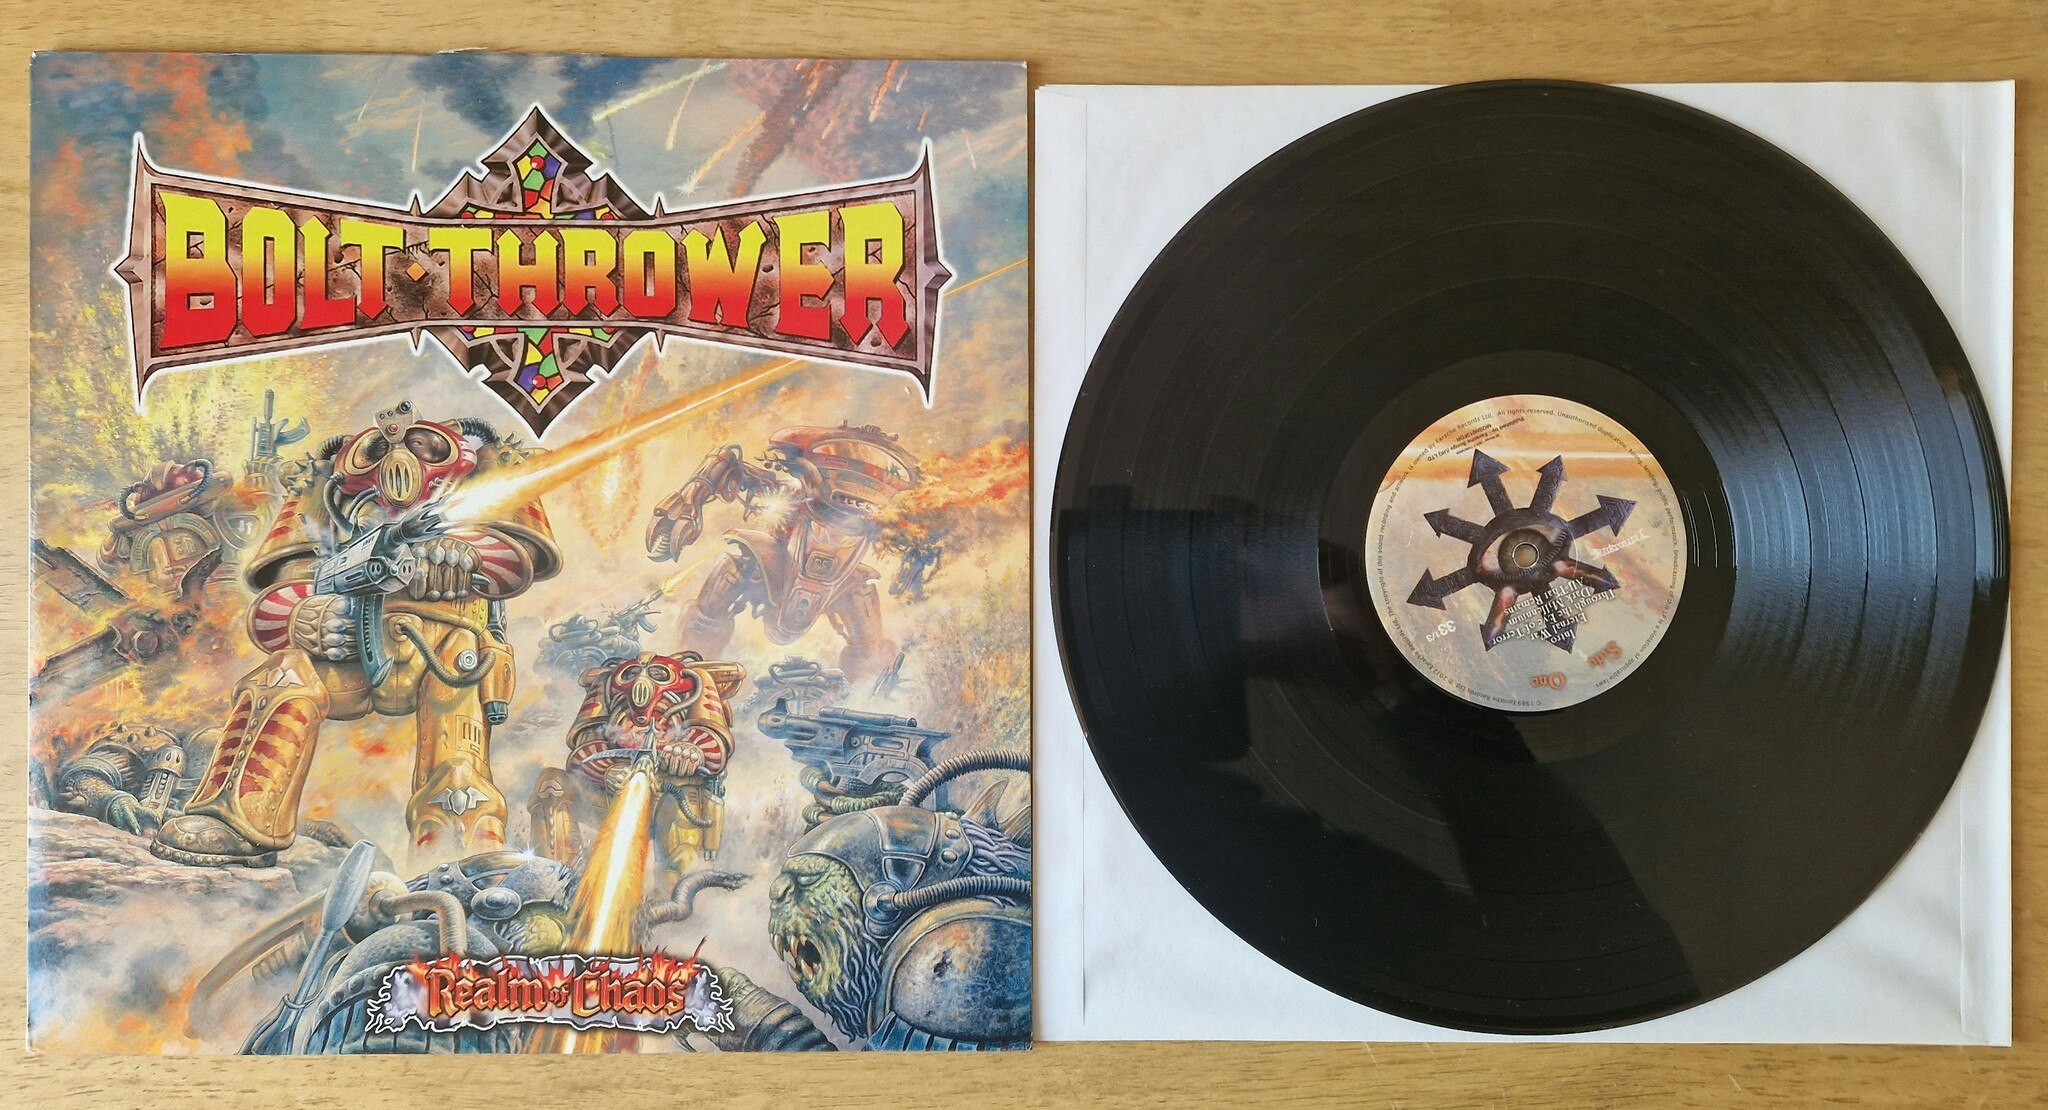 Bolt Thrower, Realm of chaos. Vinyl LP